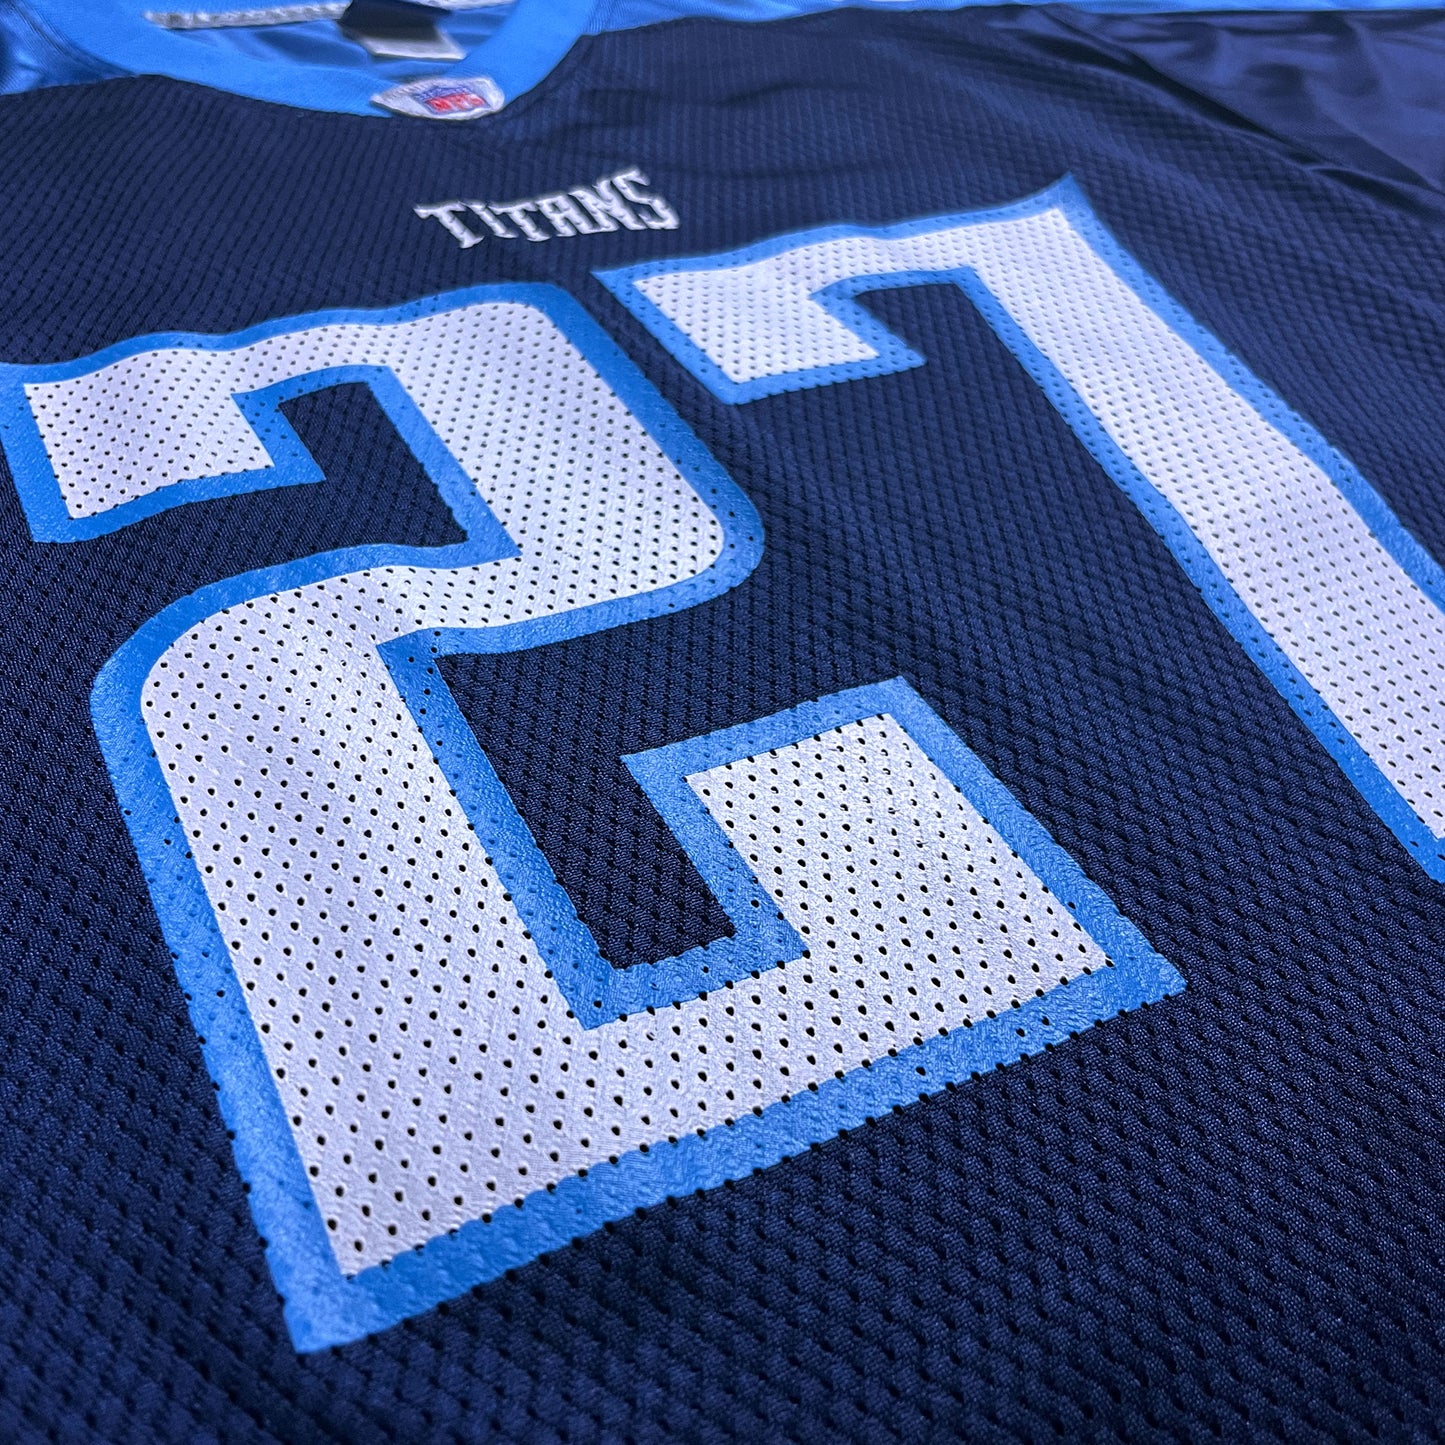 Tennessee Titans - Eddie George - Größe M - Reebok - NFL Trikot